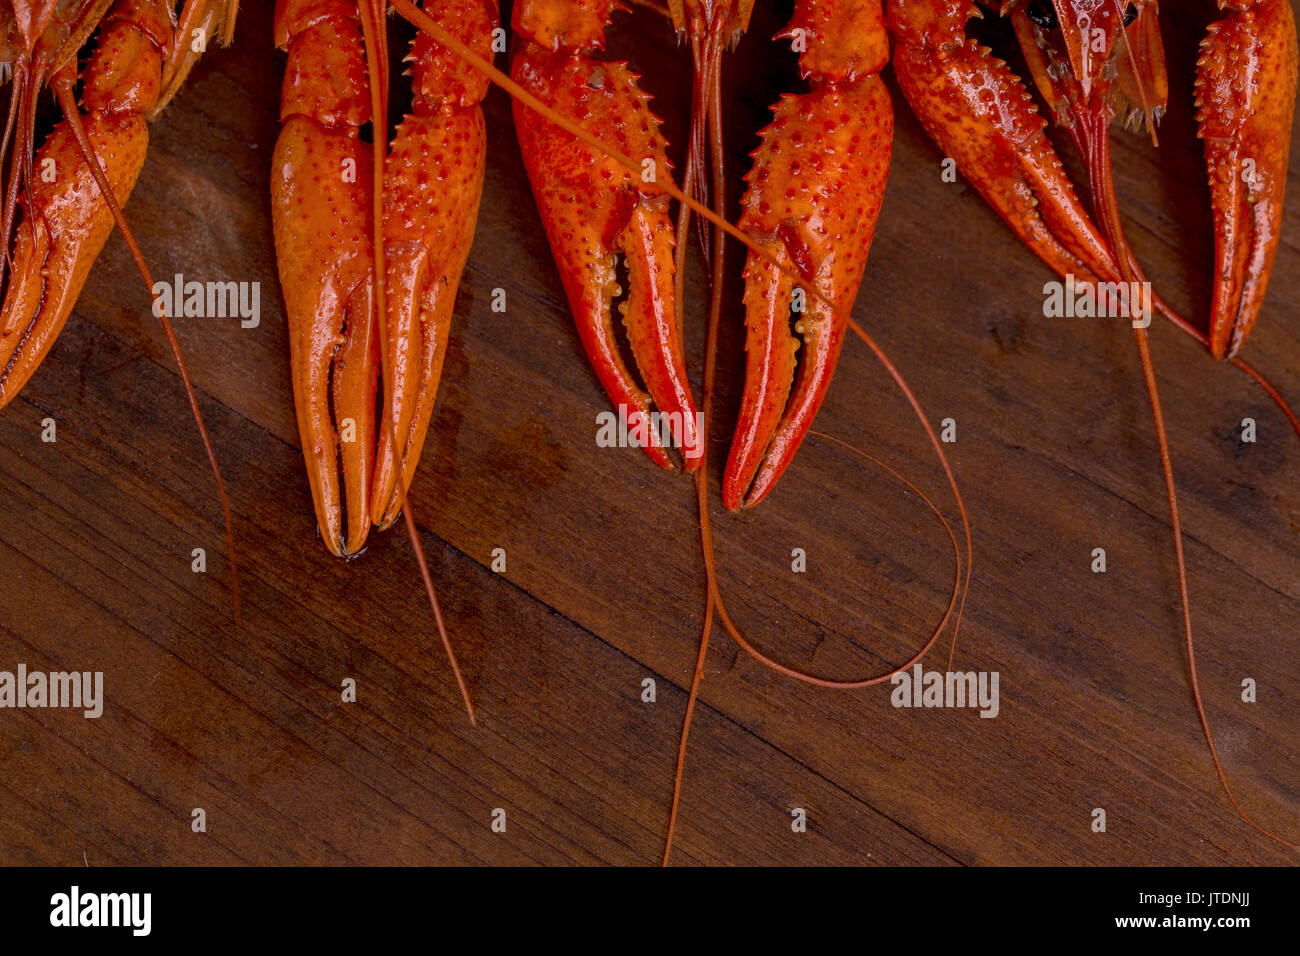 Louisiana Crawfish Boil Stock Photo